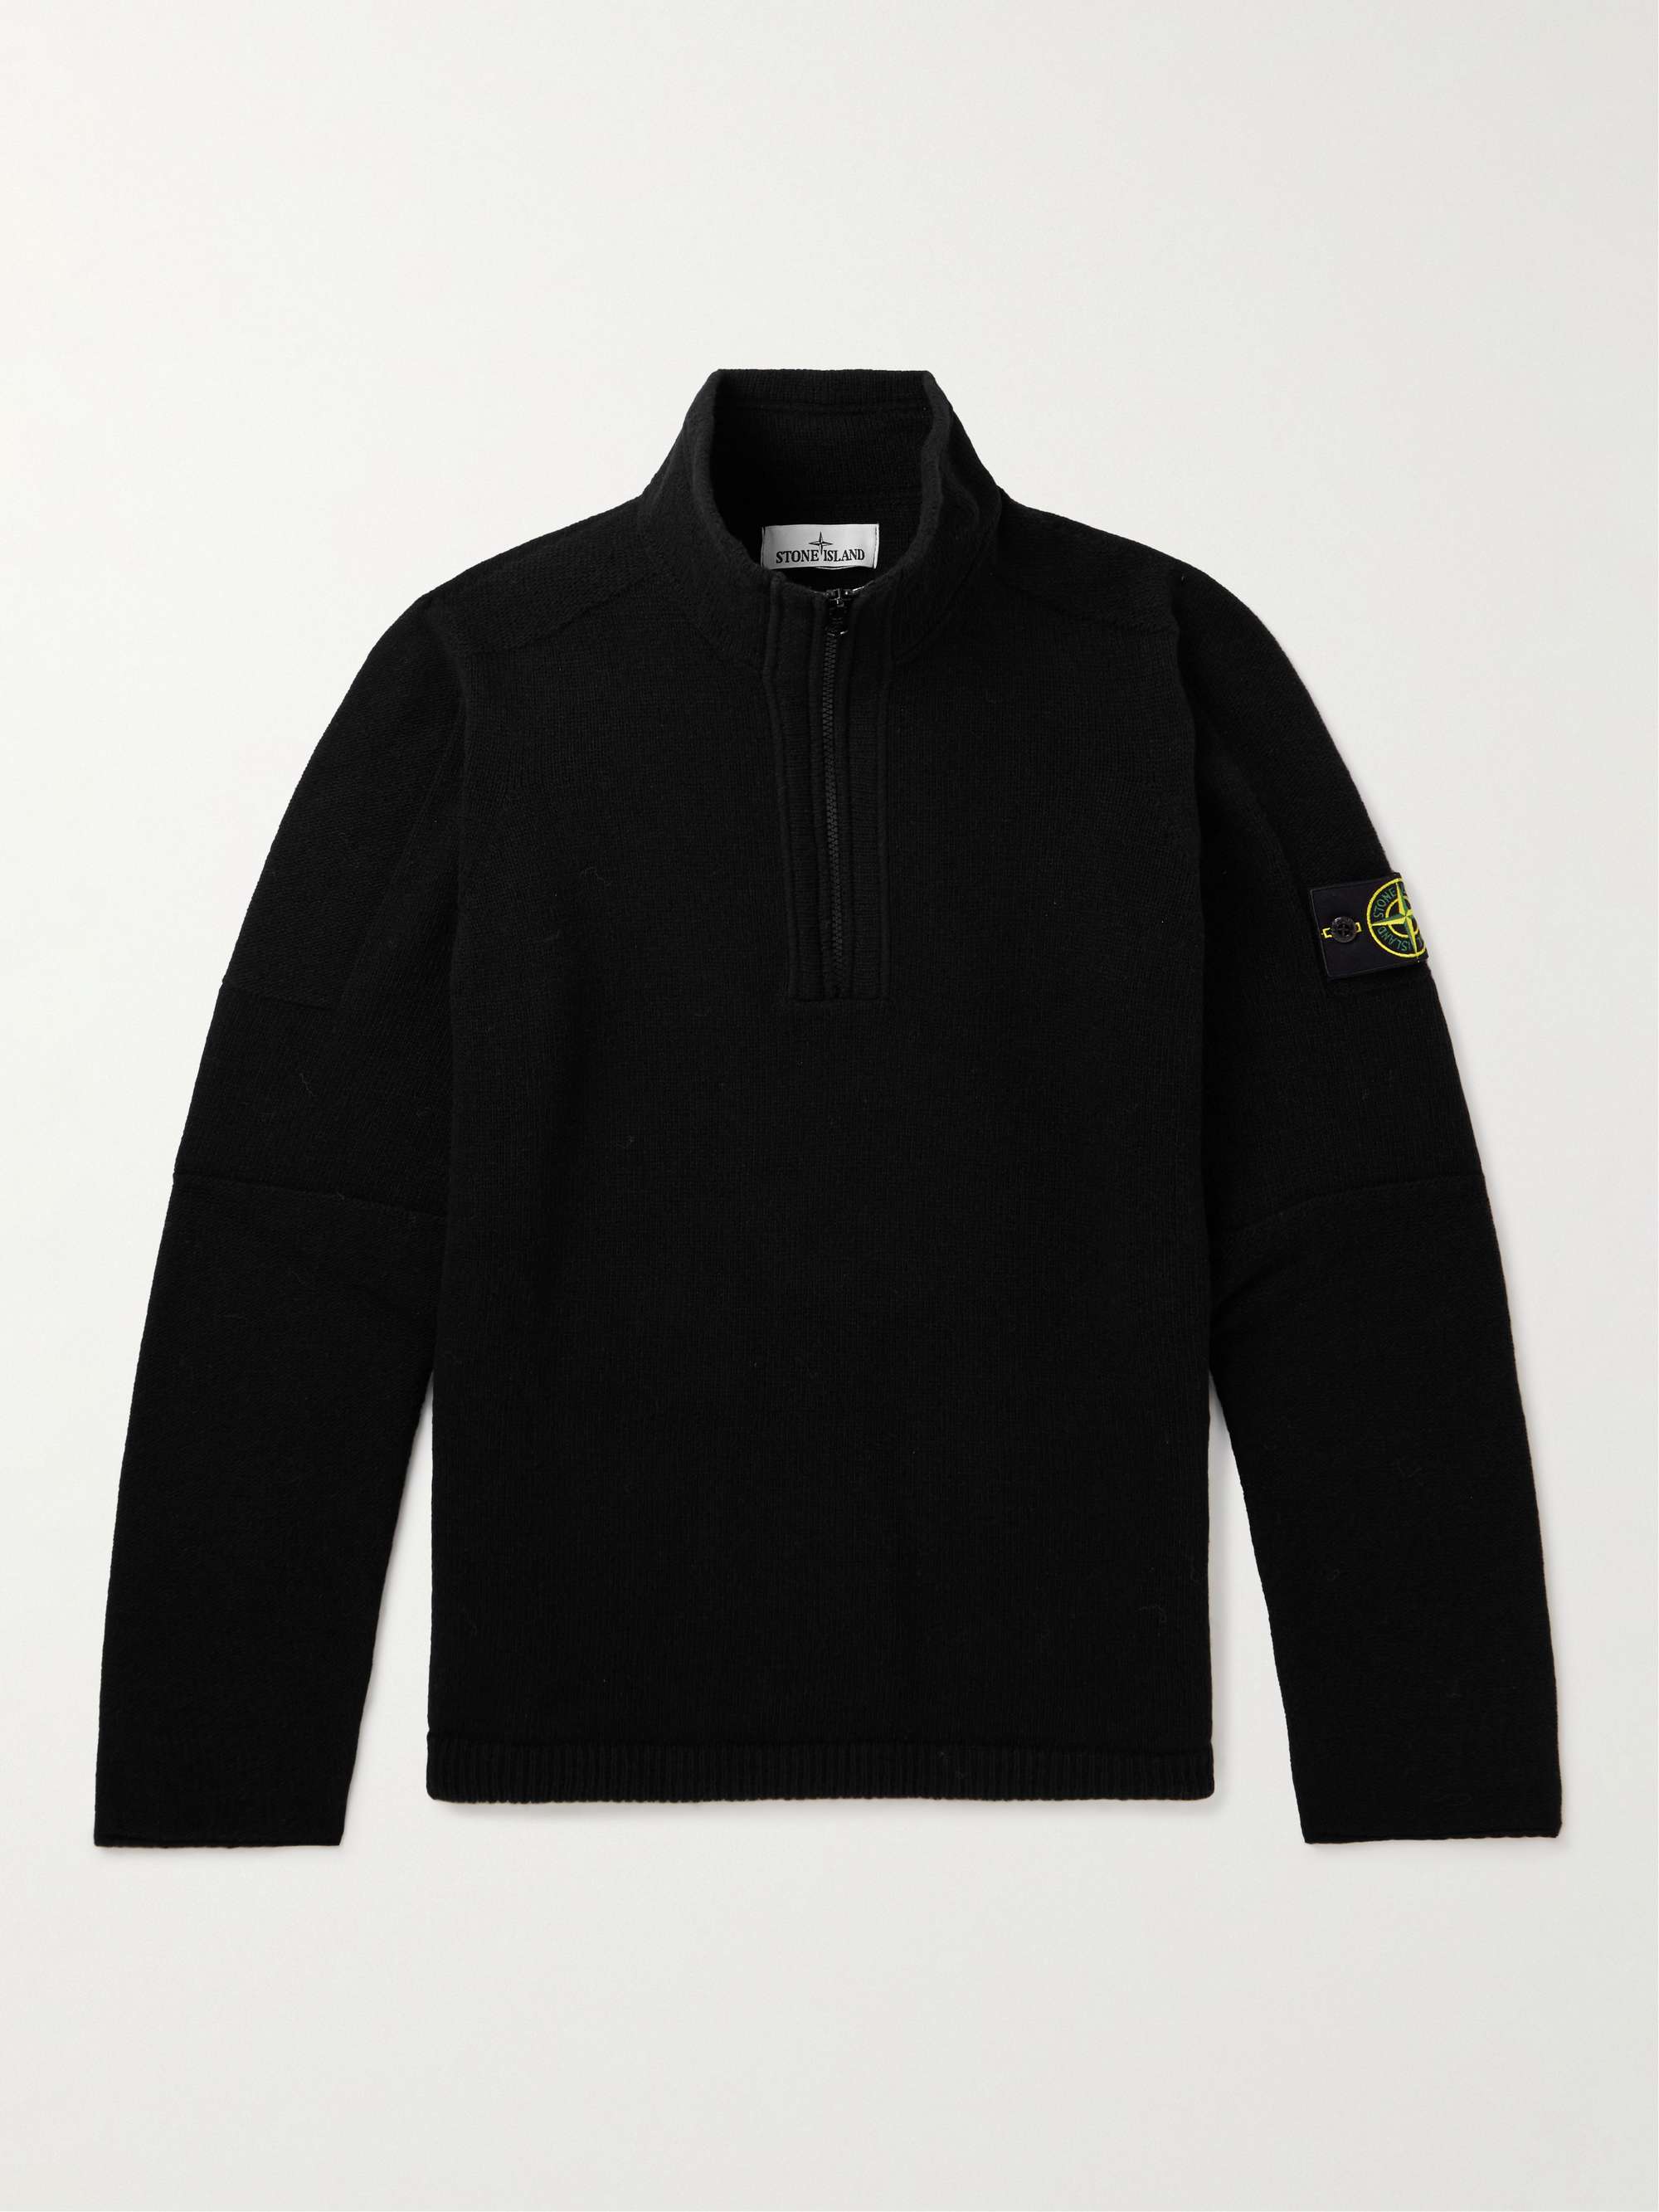 STONE ISLAND Logo-Appliquéd Wool-Blend Half-Zip Sweater for Men | MR PORTER